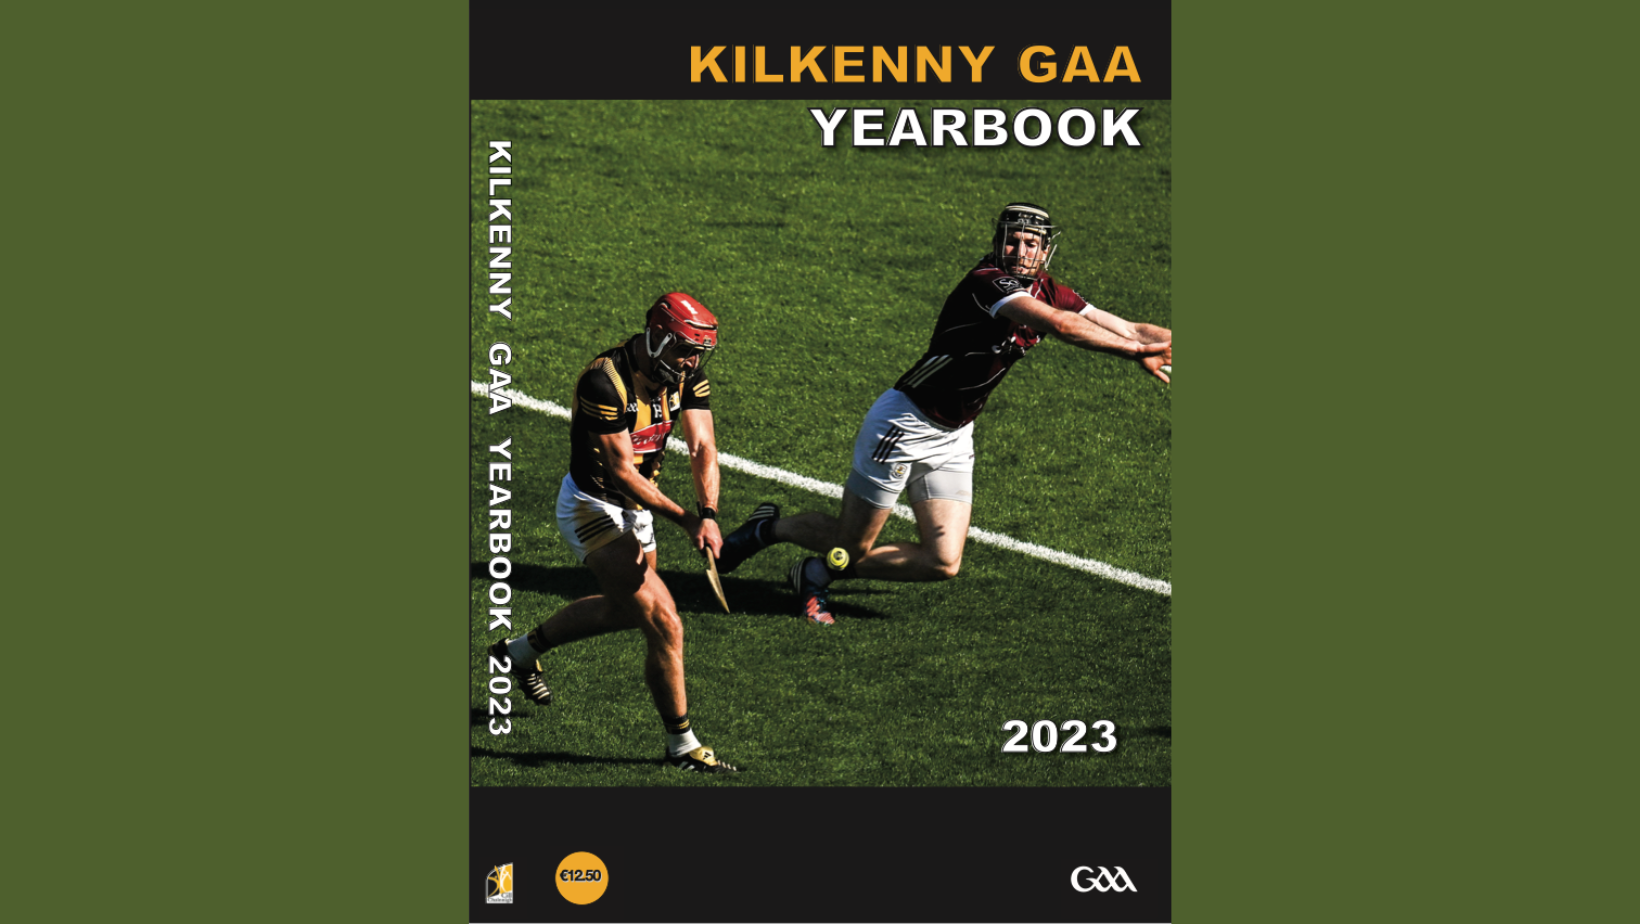 Kilkenny GAA Yearbook 2023 – On Sale Now